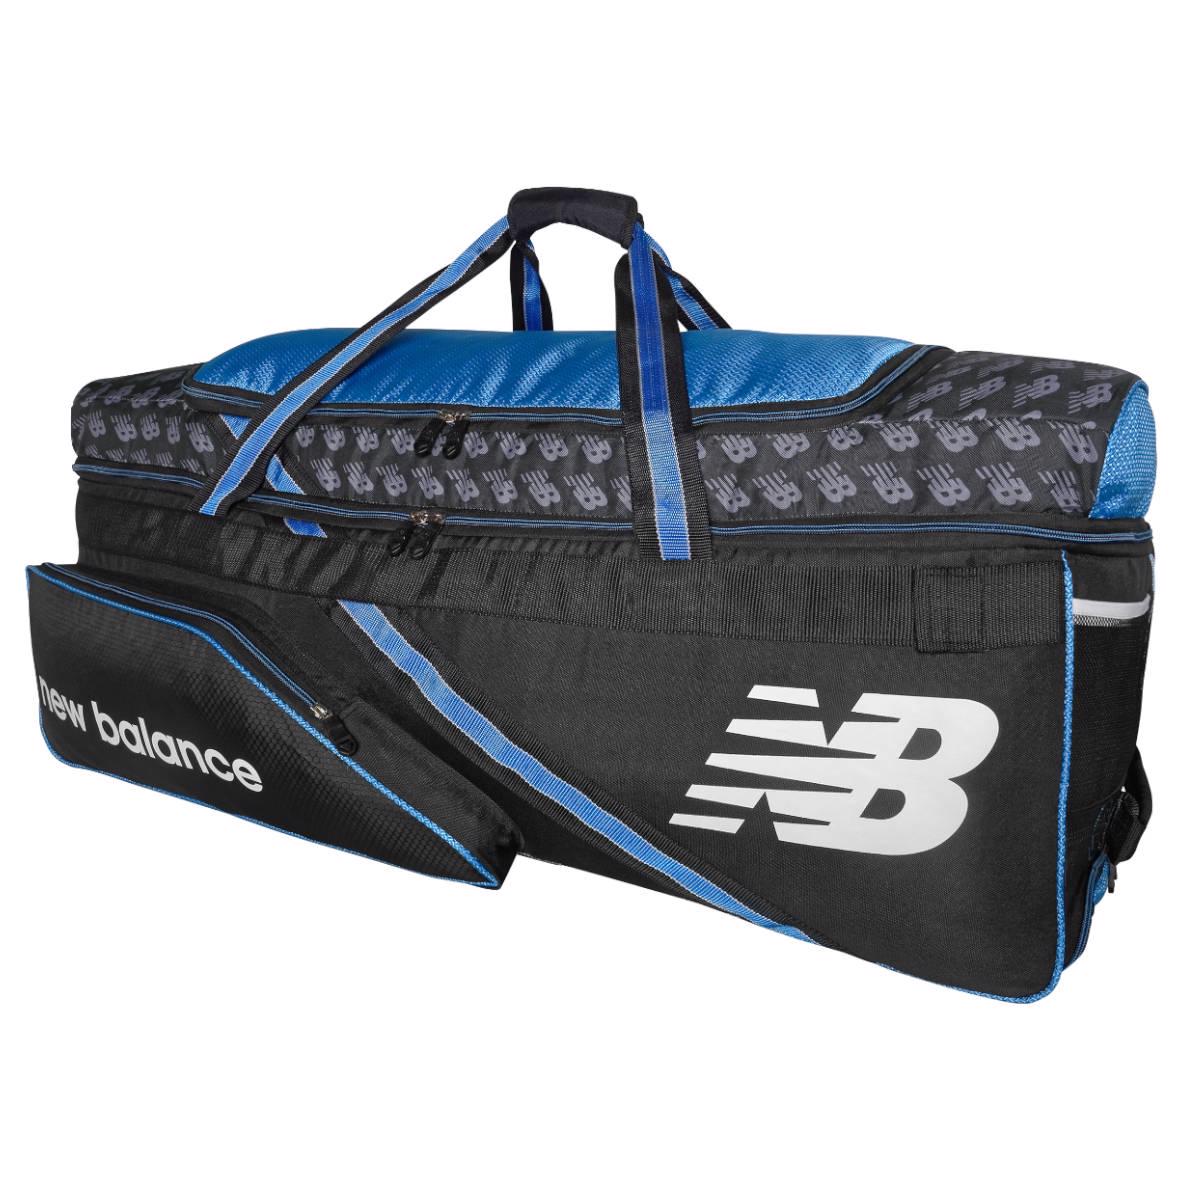 New Balance Burn 870 Cricket Wheelie Bag